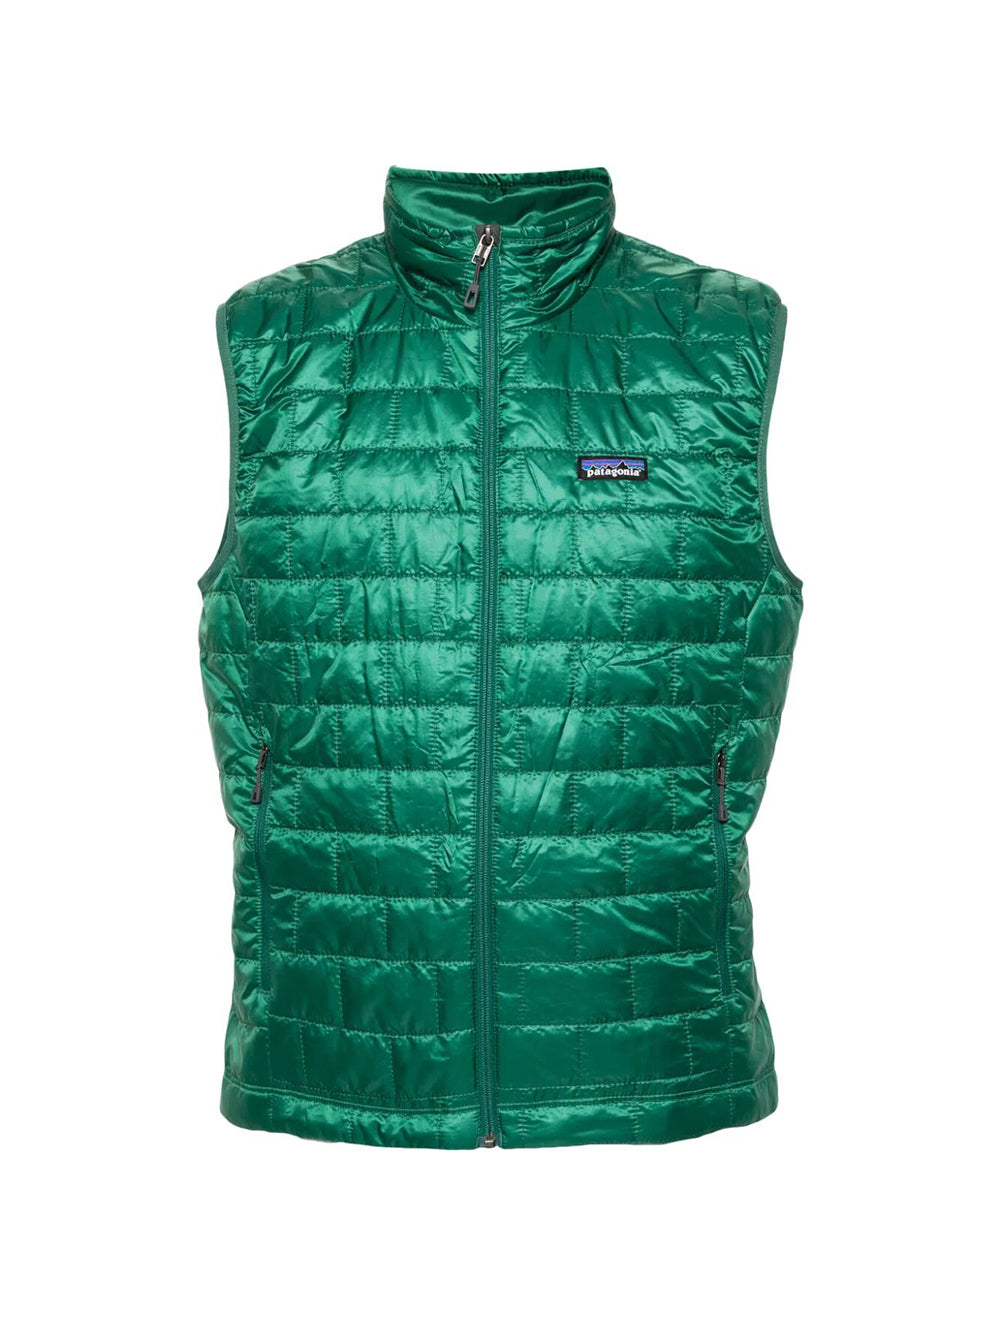 Conifer green Nano Puff vest